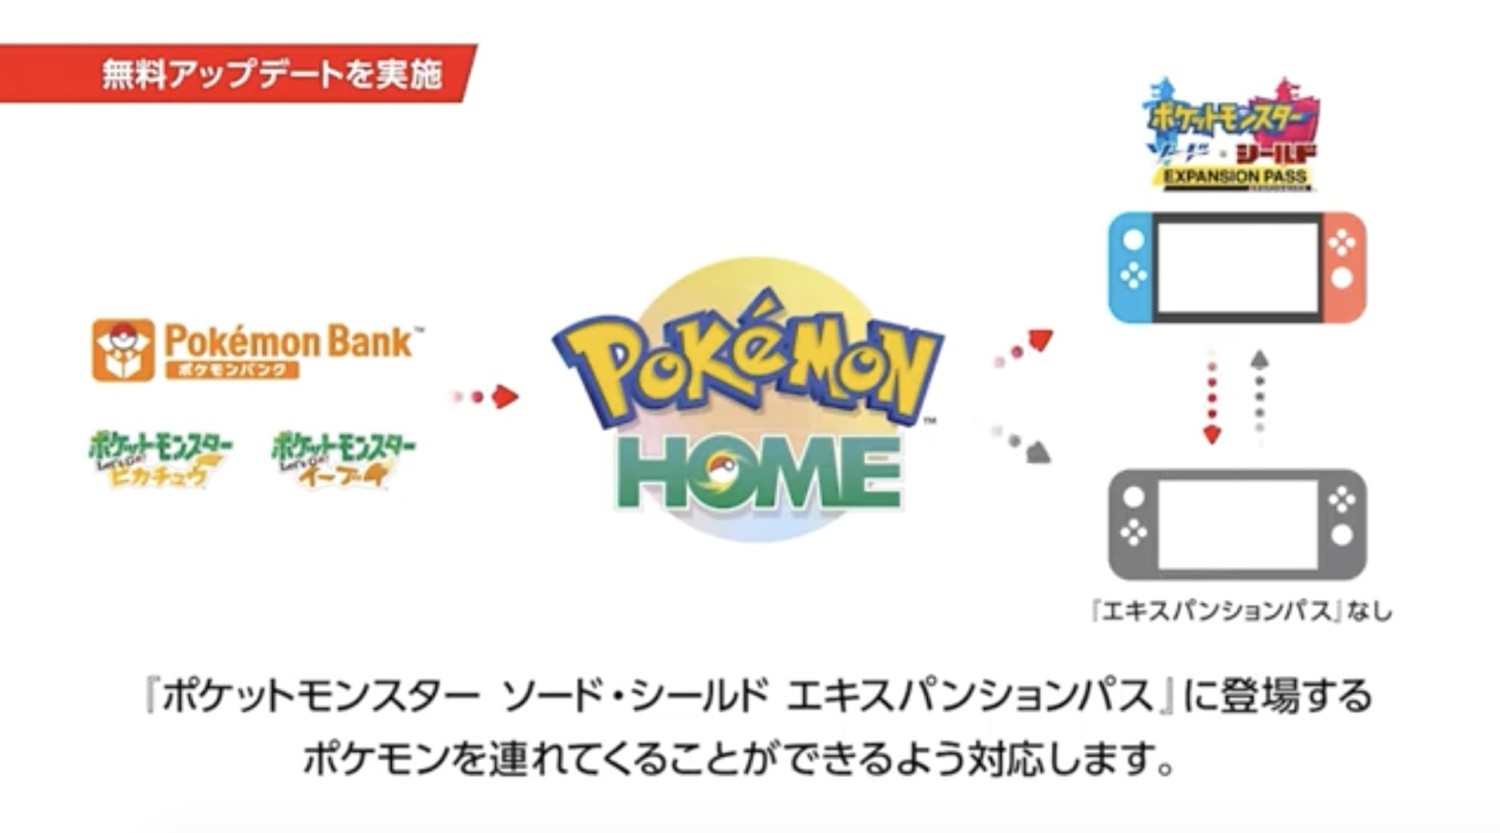 Pokemon Sword & Shield Home Upload Service